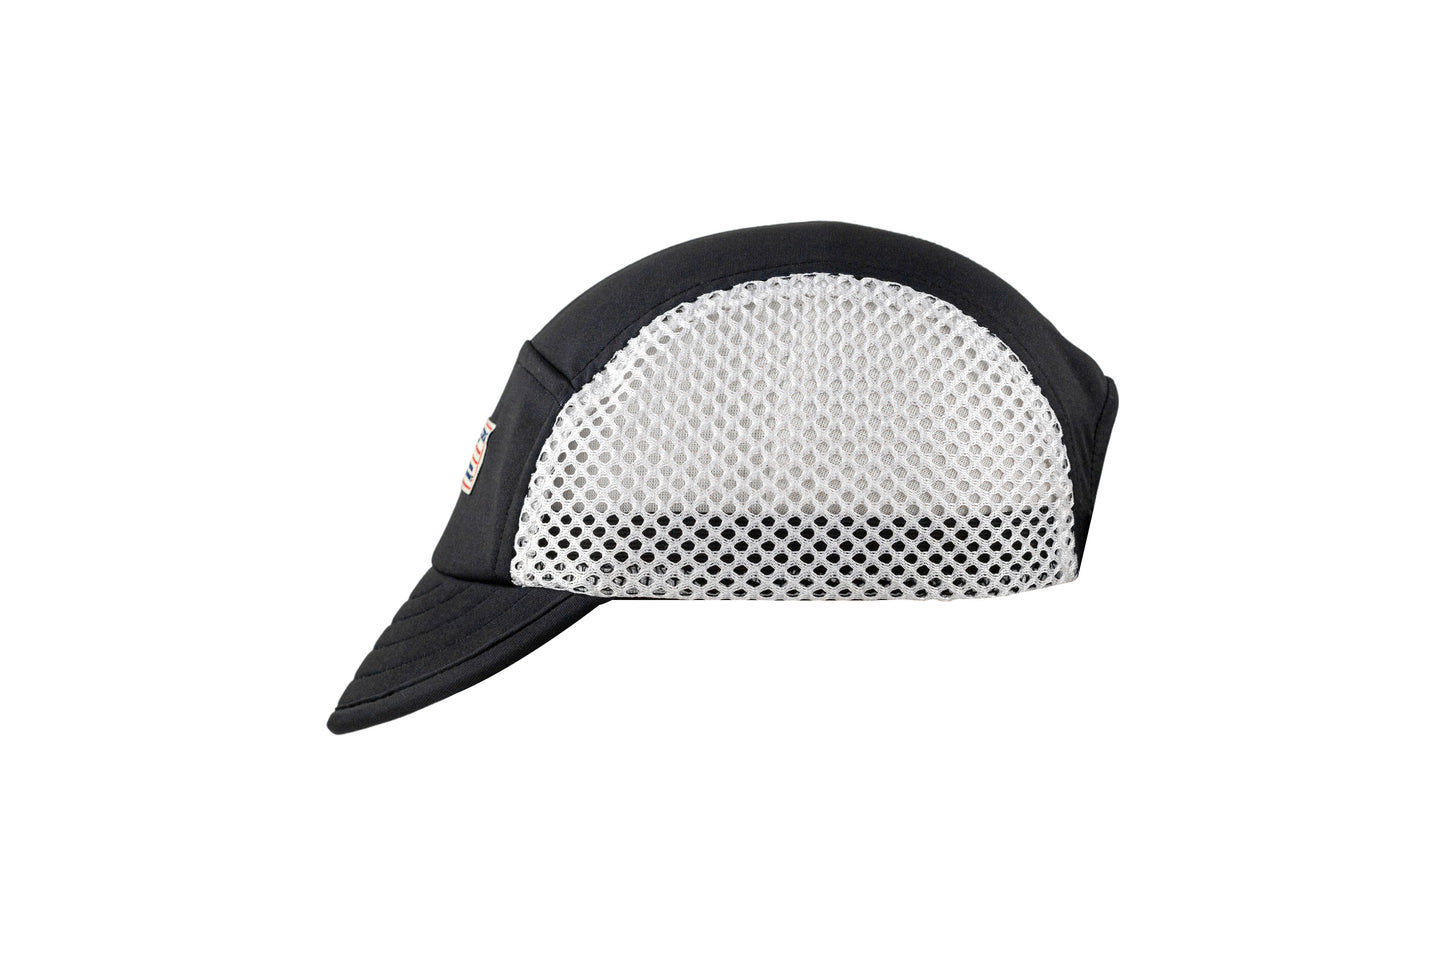 GW “DAYPACK” Mesh Cycling cap (Black)